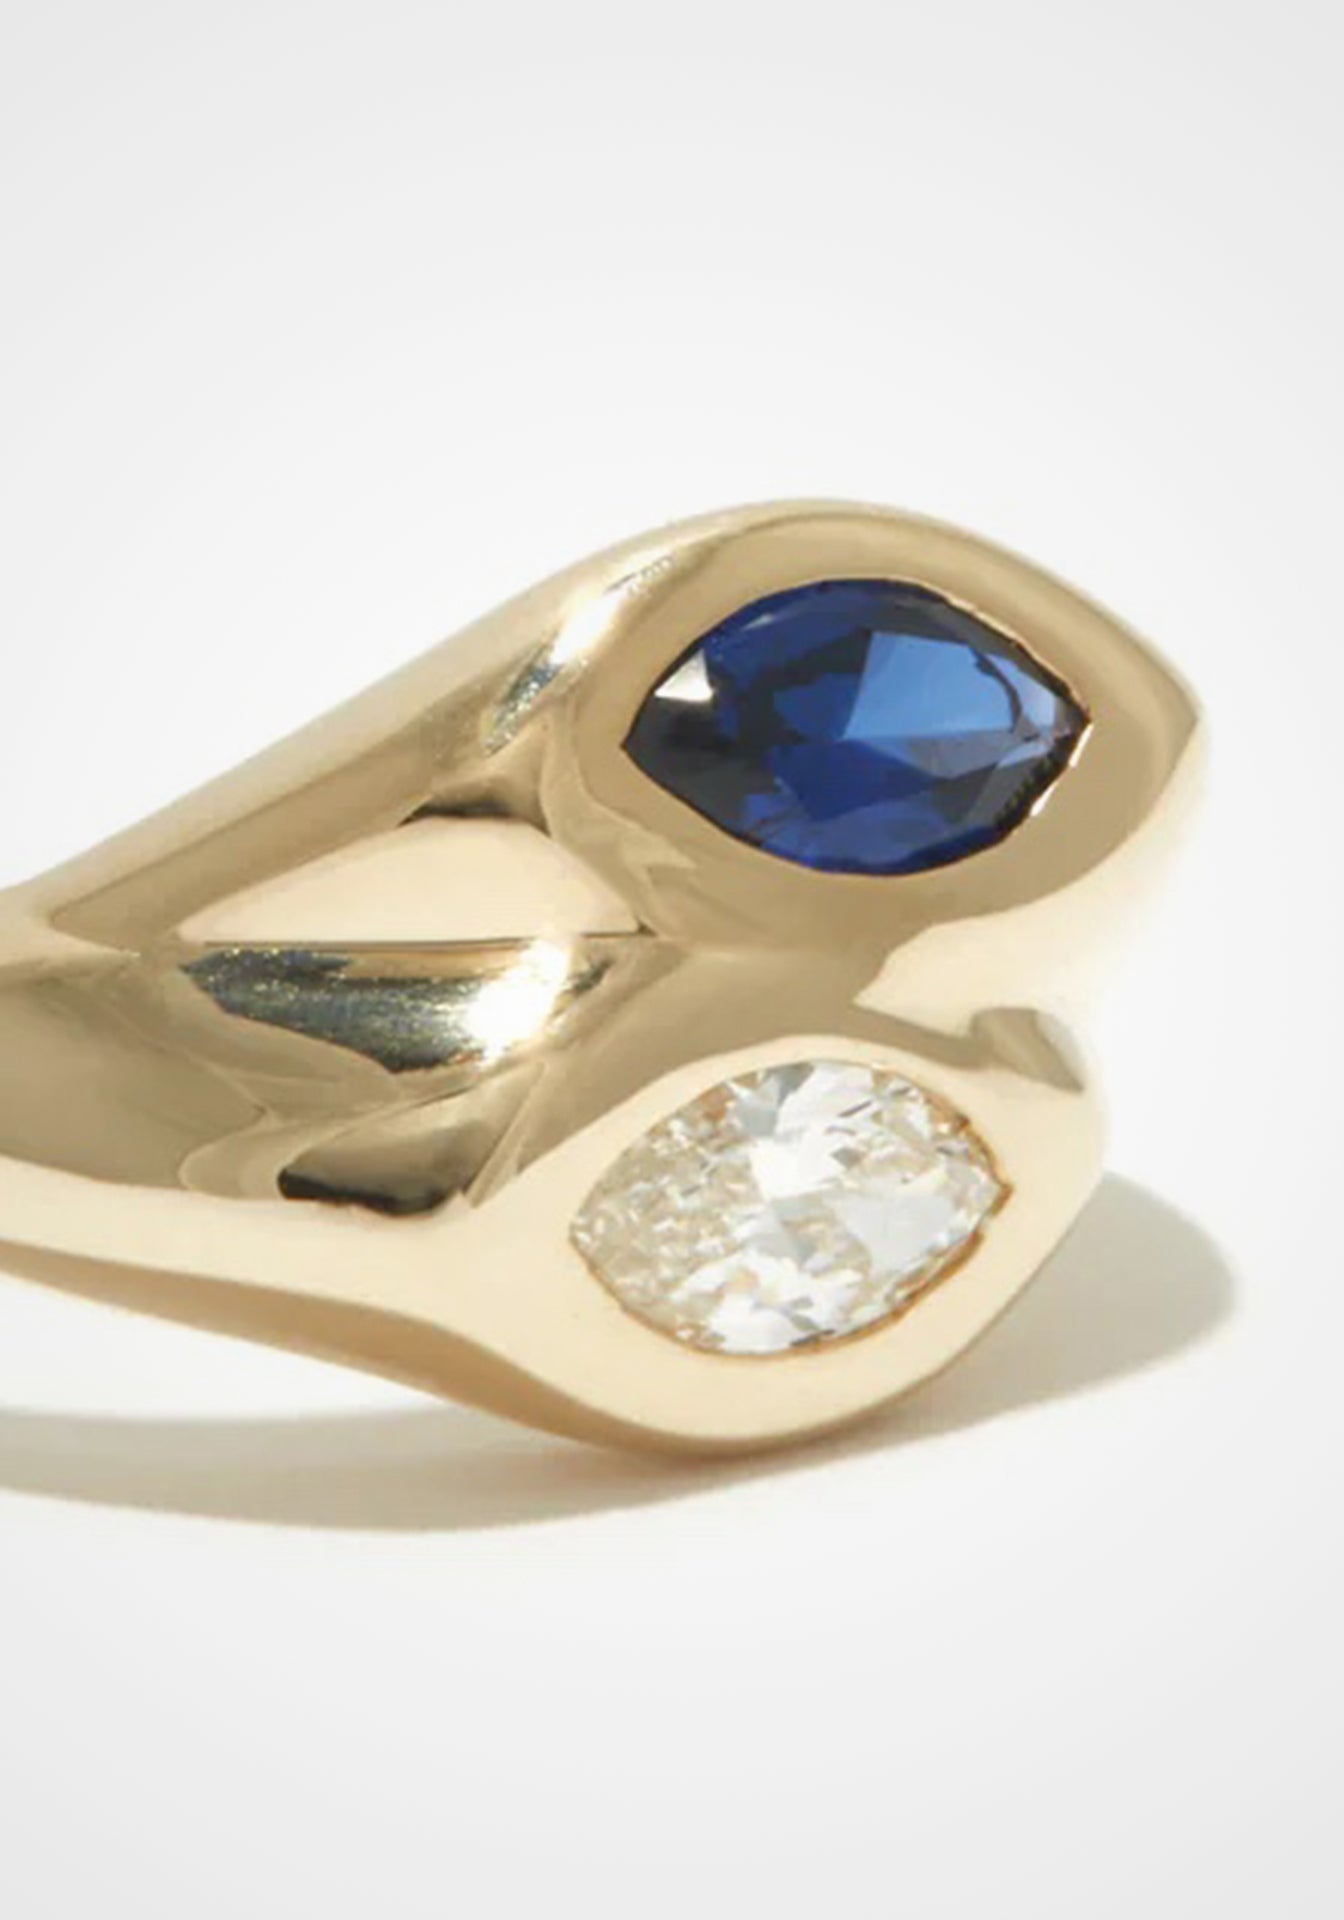 Toi et Moi Marquise Bubble, 14K Yellow Gold, Sapphire + Diamond Ring